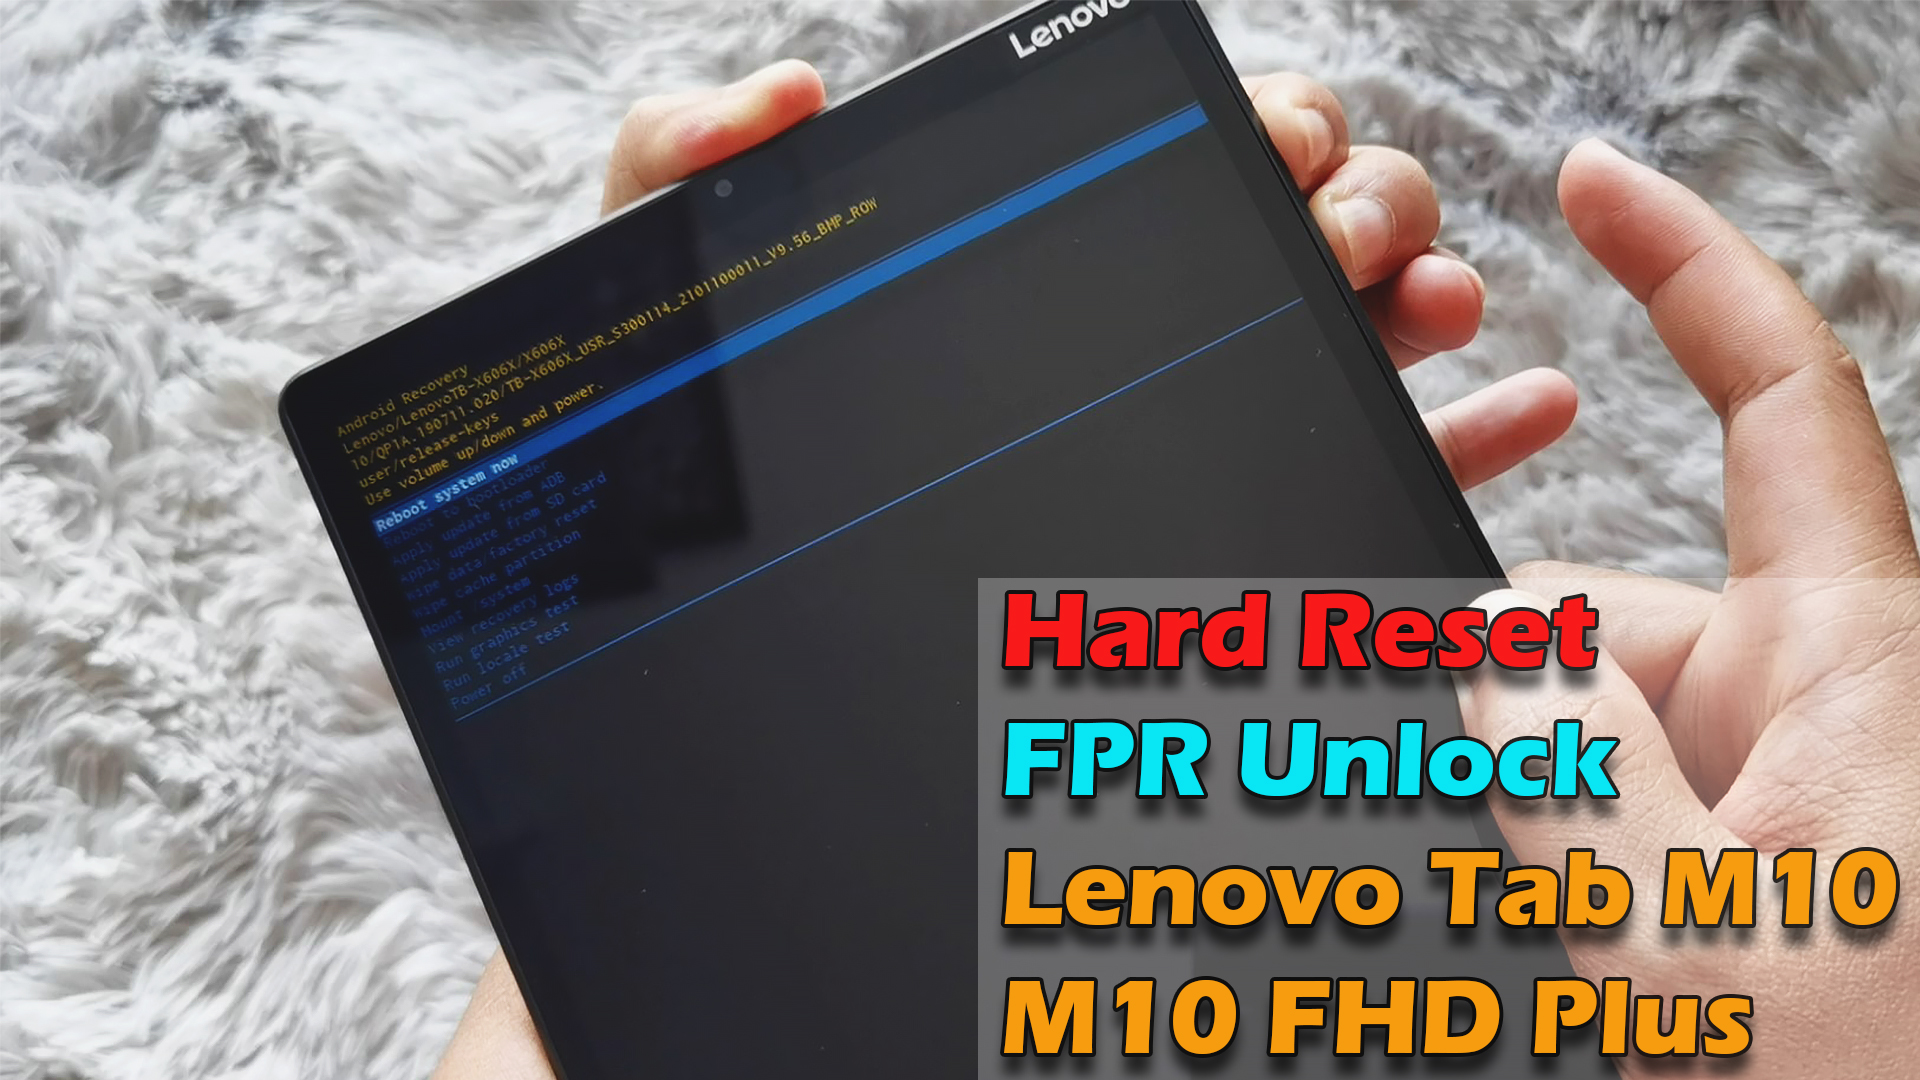 Hard Reset & FPR Unlock Lenovo Tab M10 | M10 FHD Plus - ICTfix